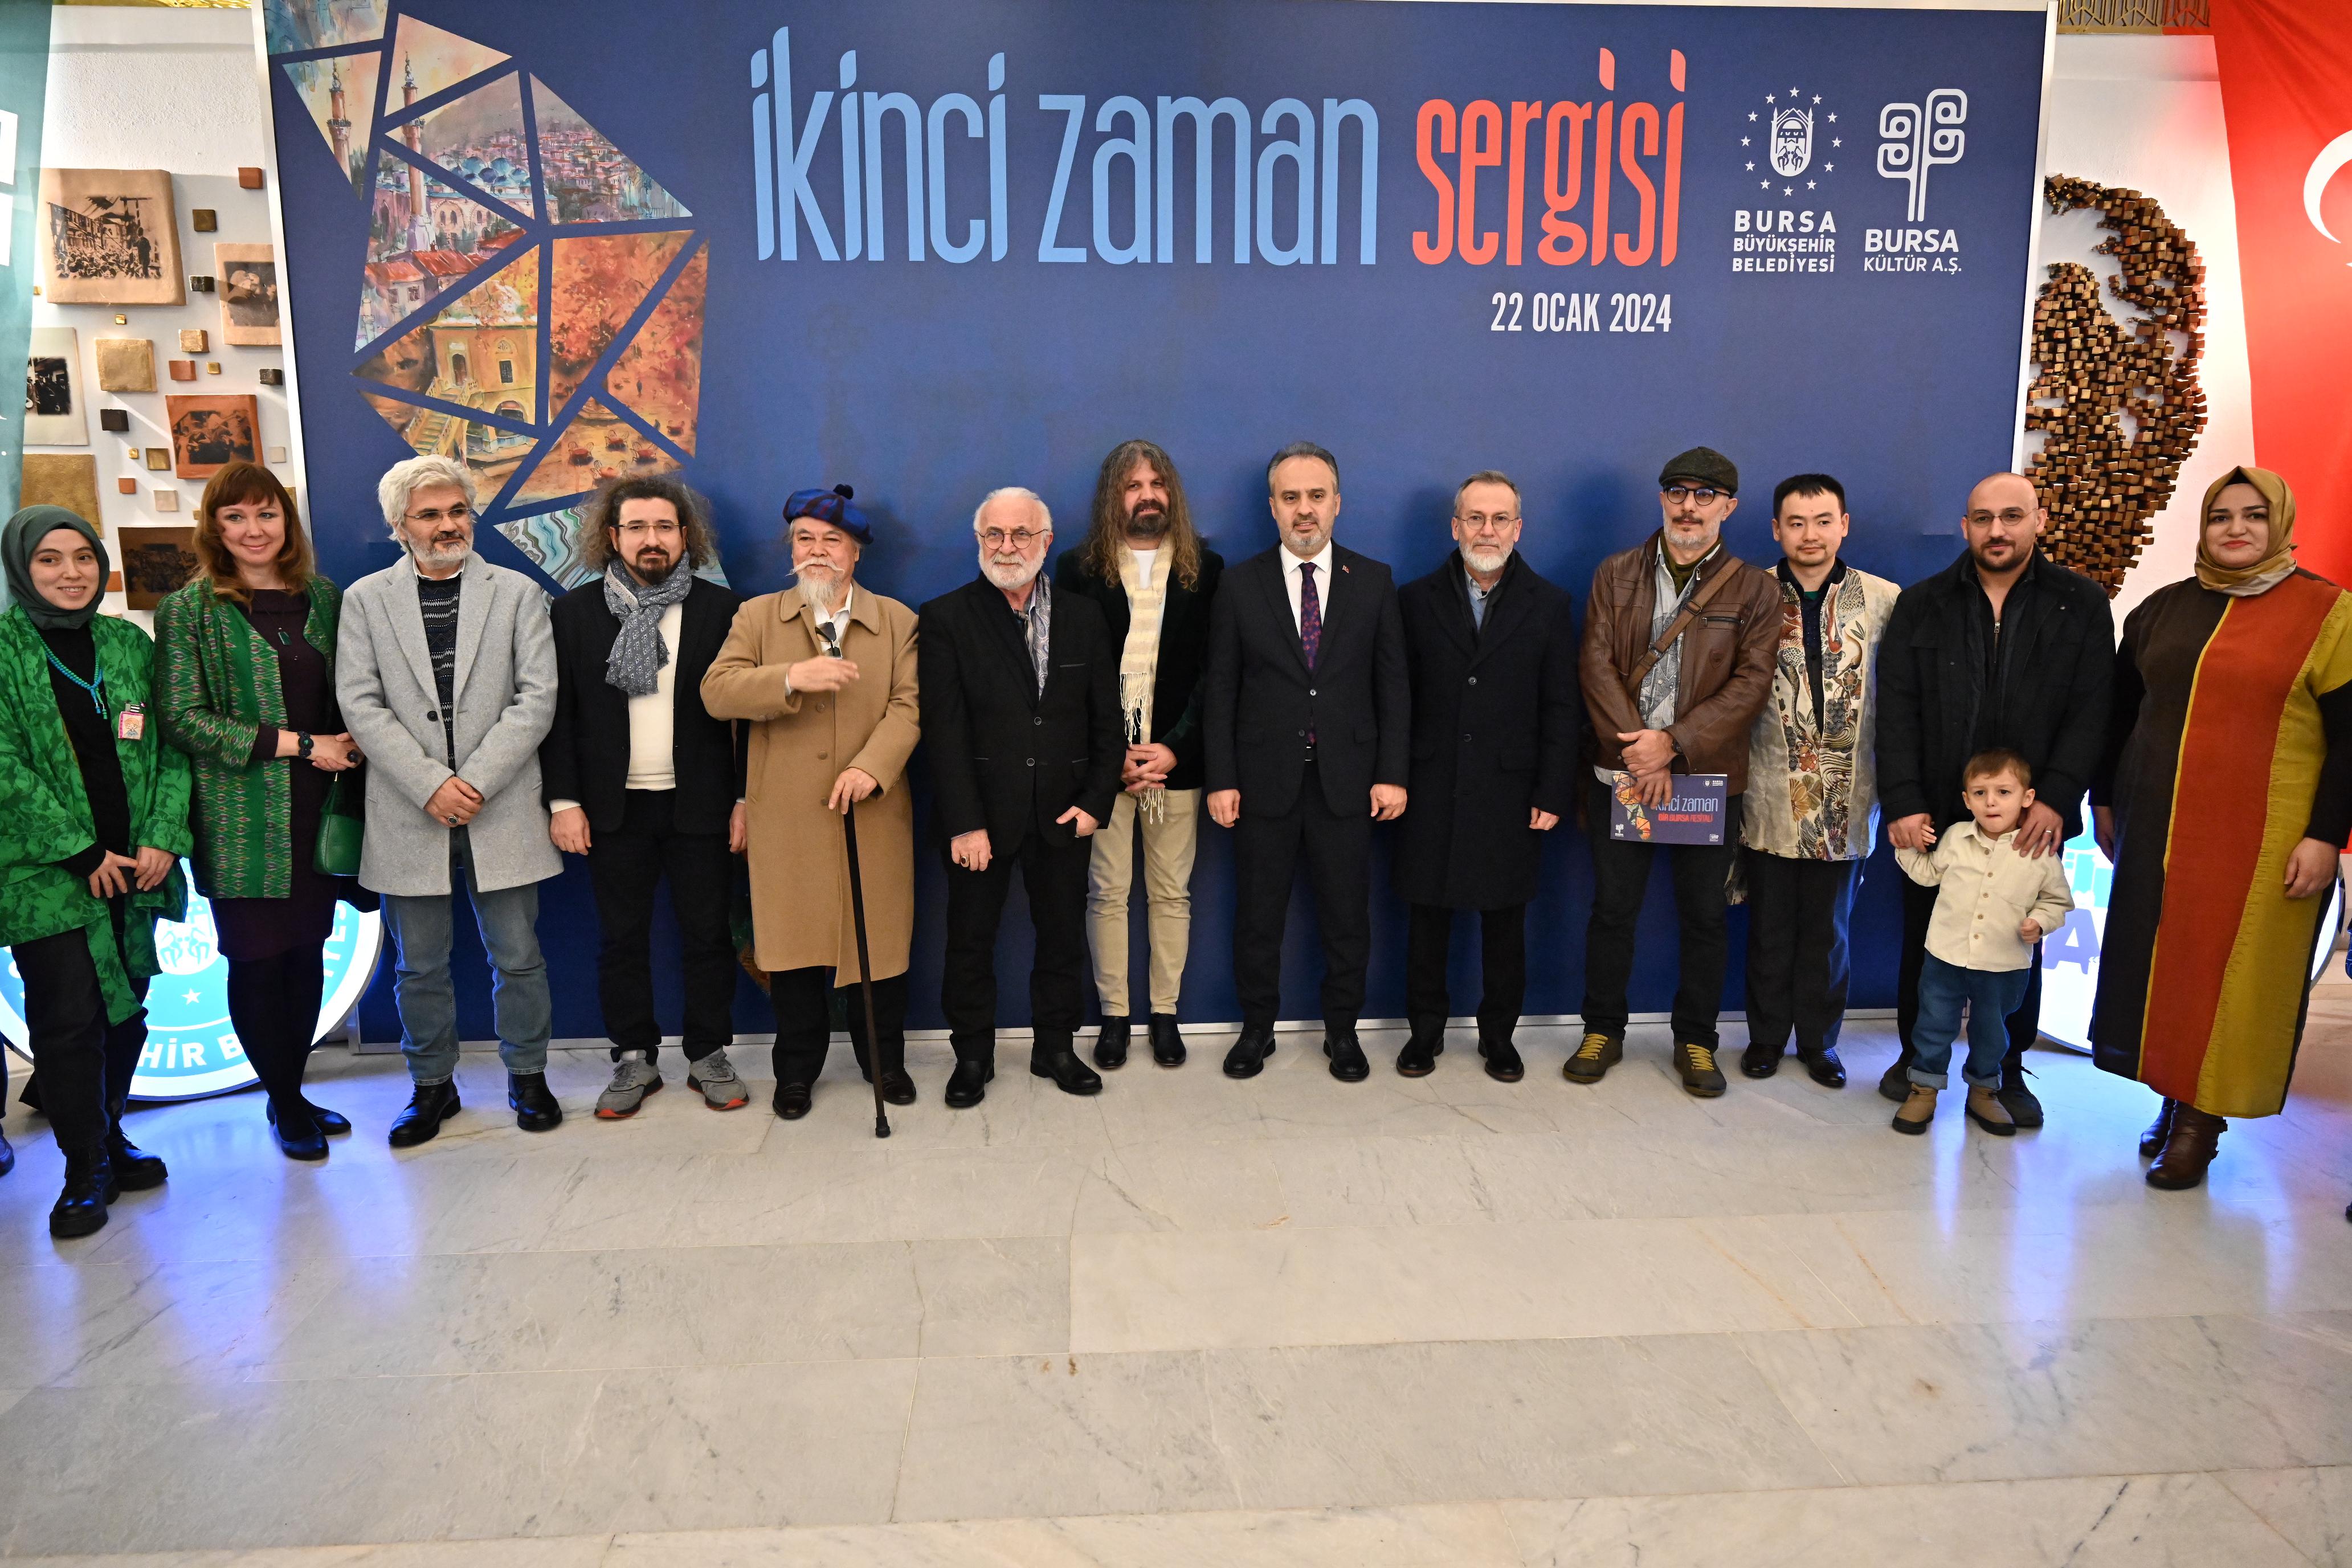 Bursa’da “İkinci Zaman” sergisi açıldı